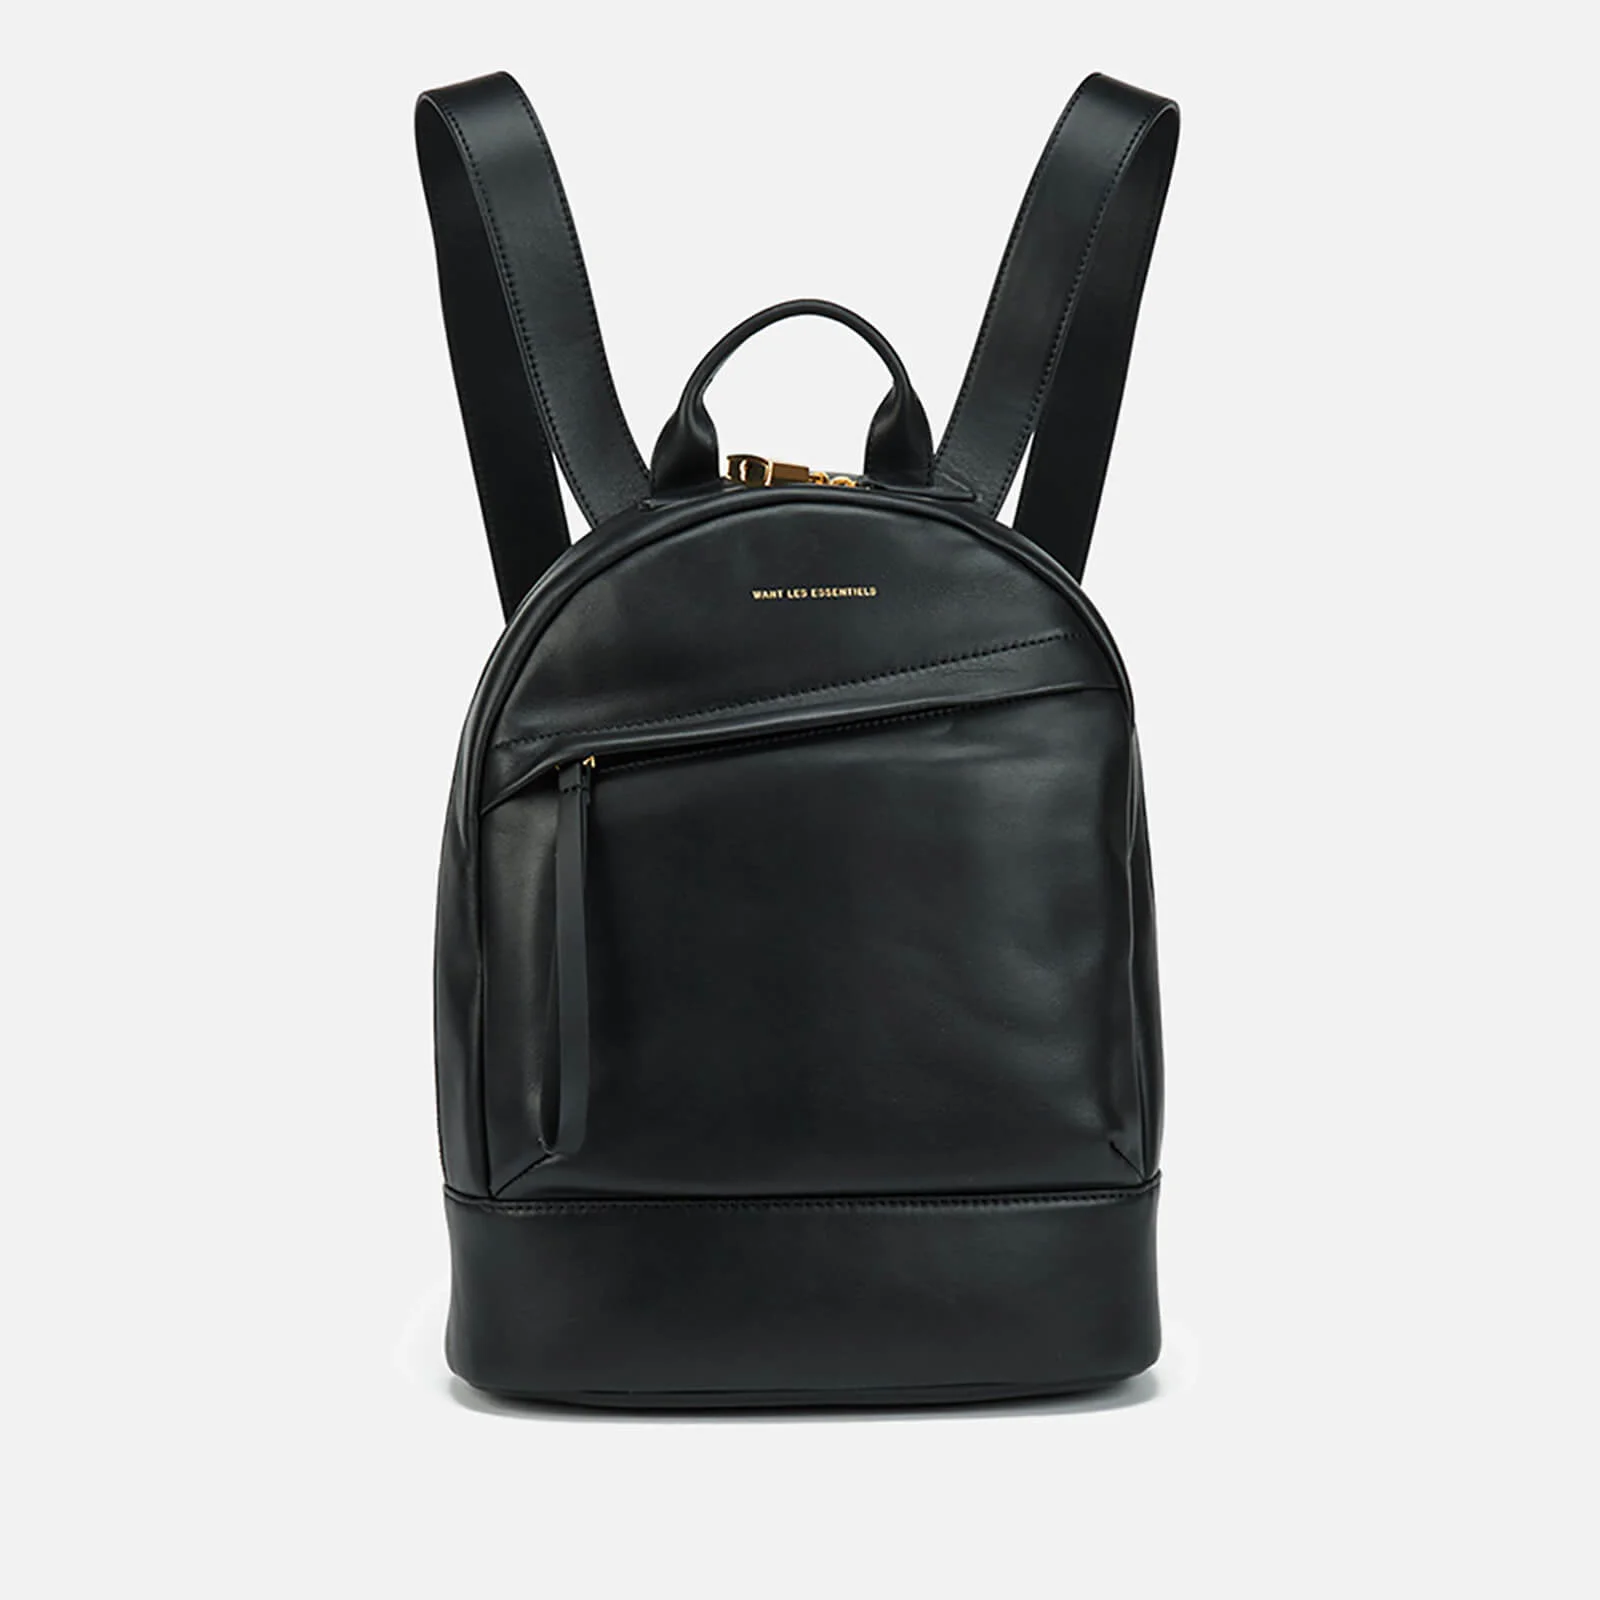 WANT LES ESSENTIELS Women's Mini Piper Backpack - Black Image 1